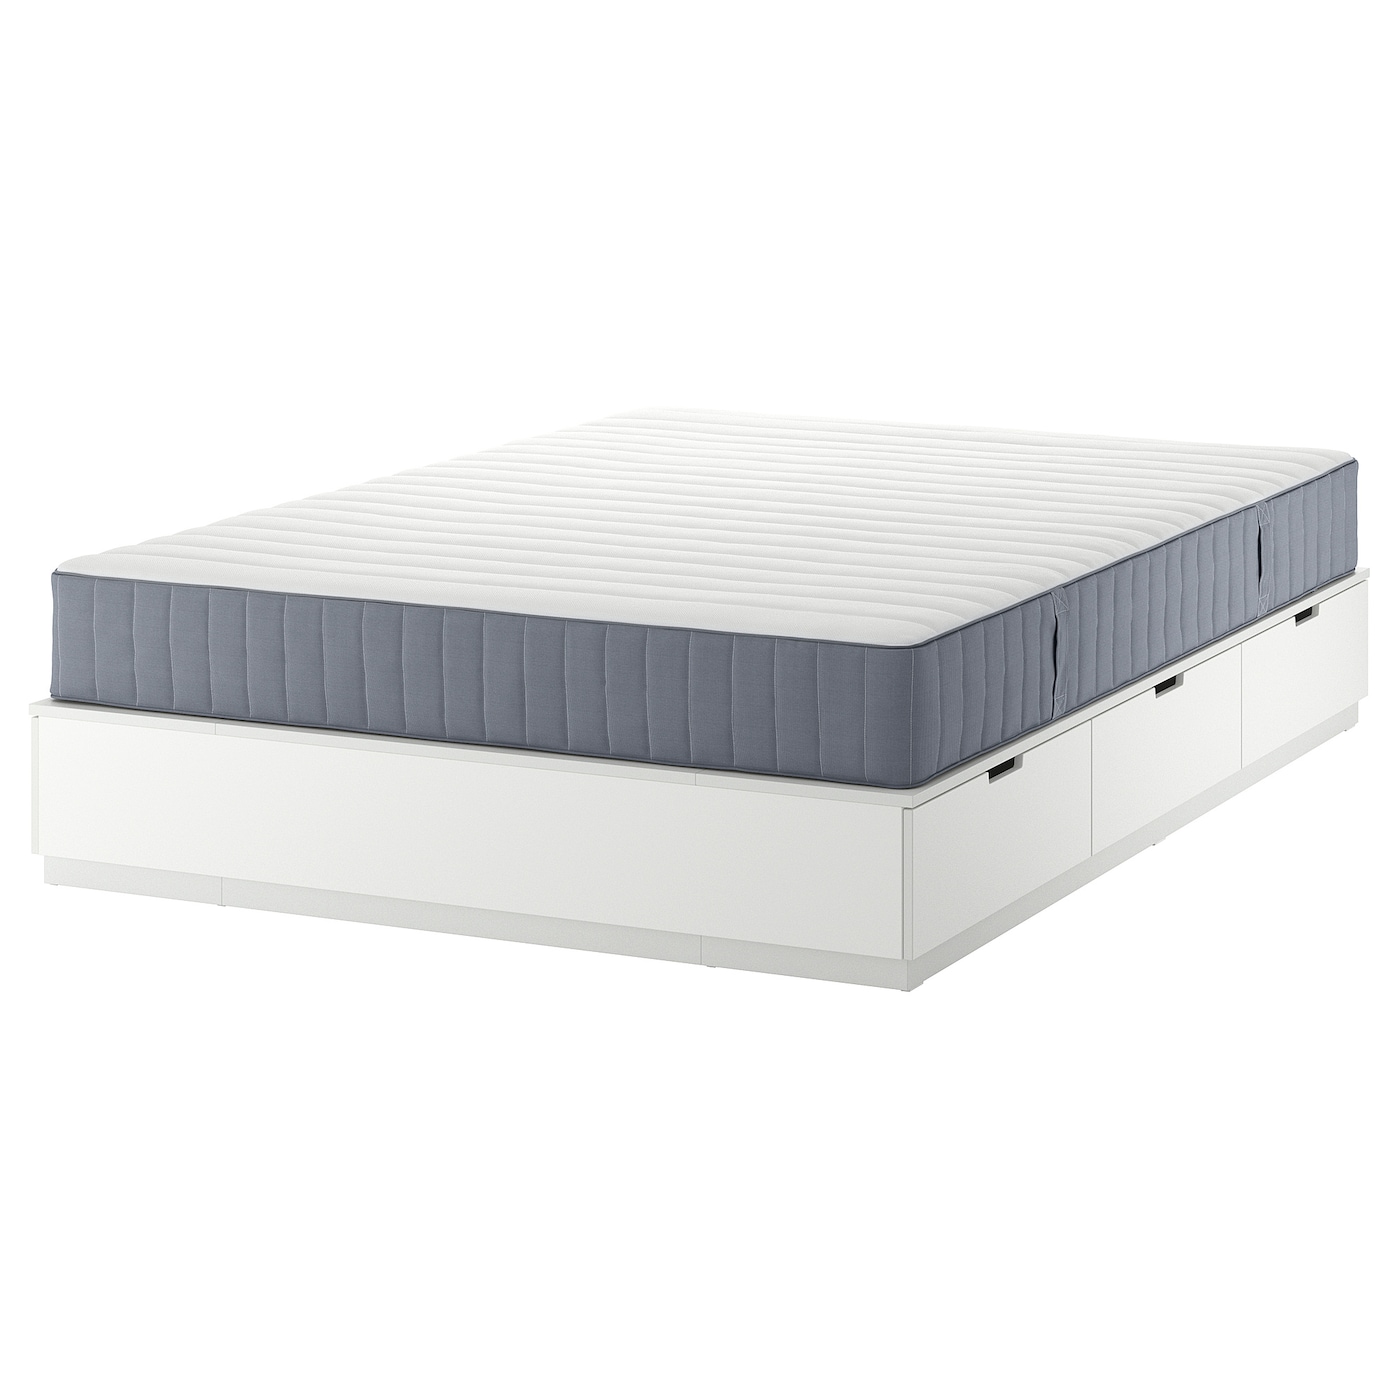 Каркас кровати с ящиком и матрасом - IKEA NORDLI, 200х140 см, матрас средне-жесткий, белый, НОРДЛИ ИКЕА